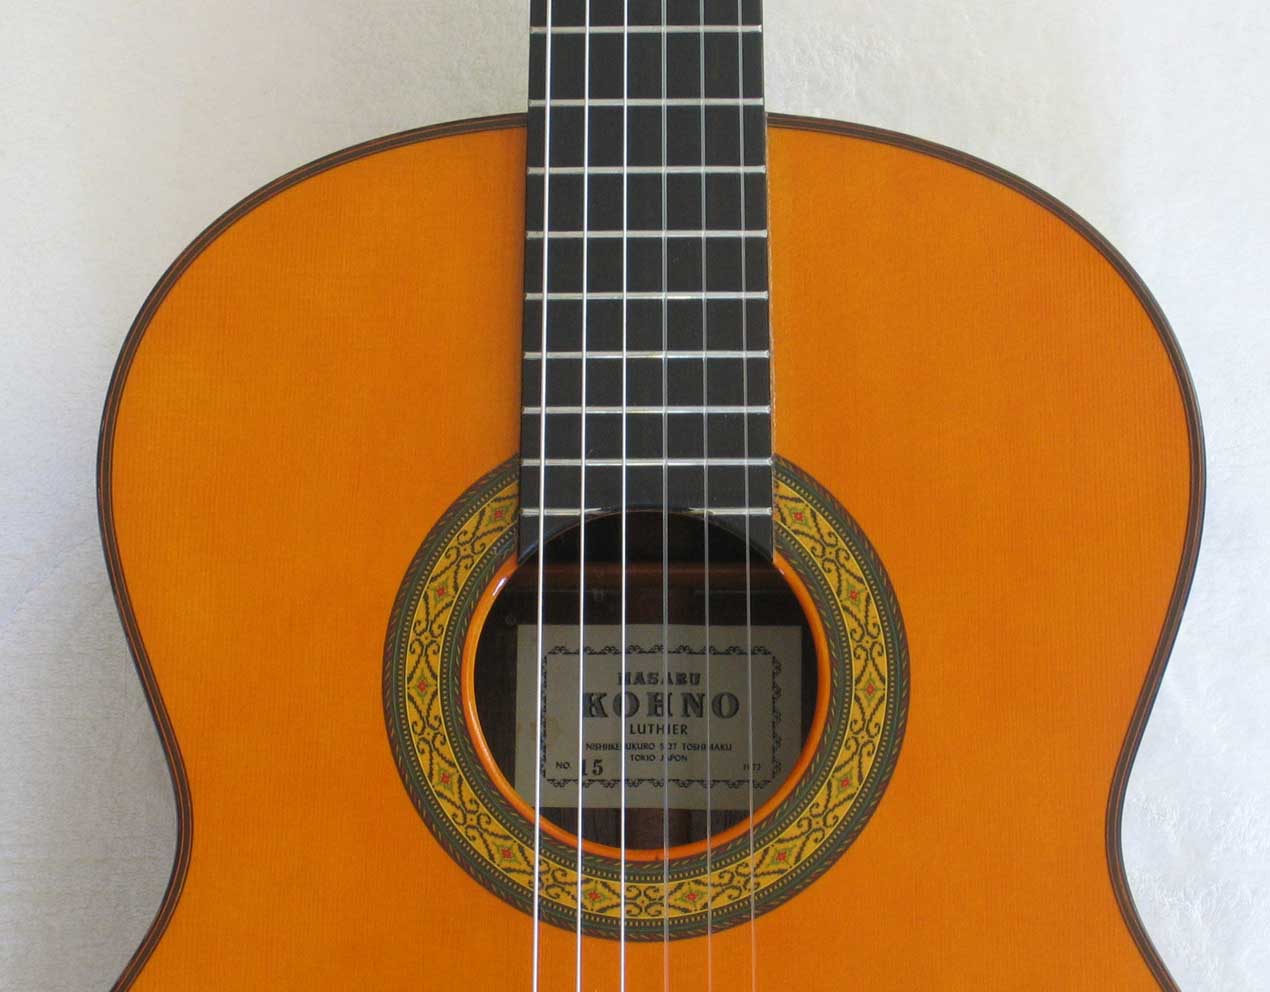 1972 Masaru Kohno Model 15 Classical Guitar